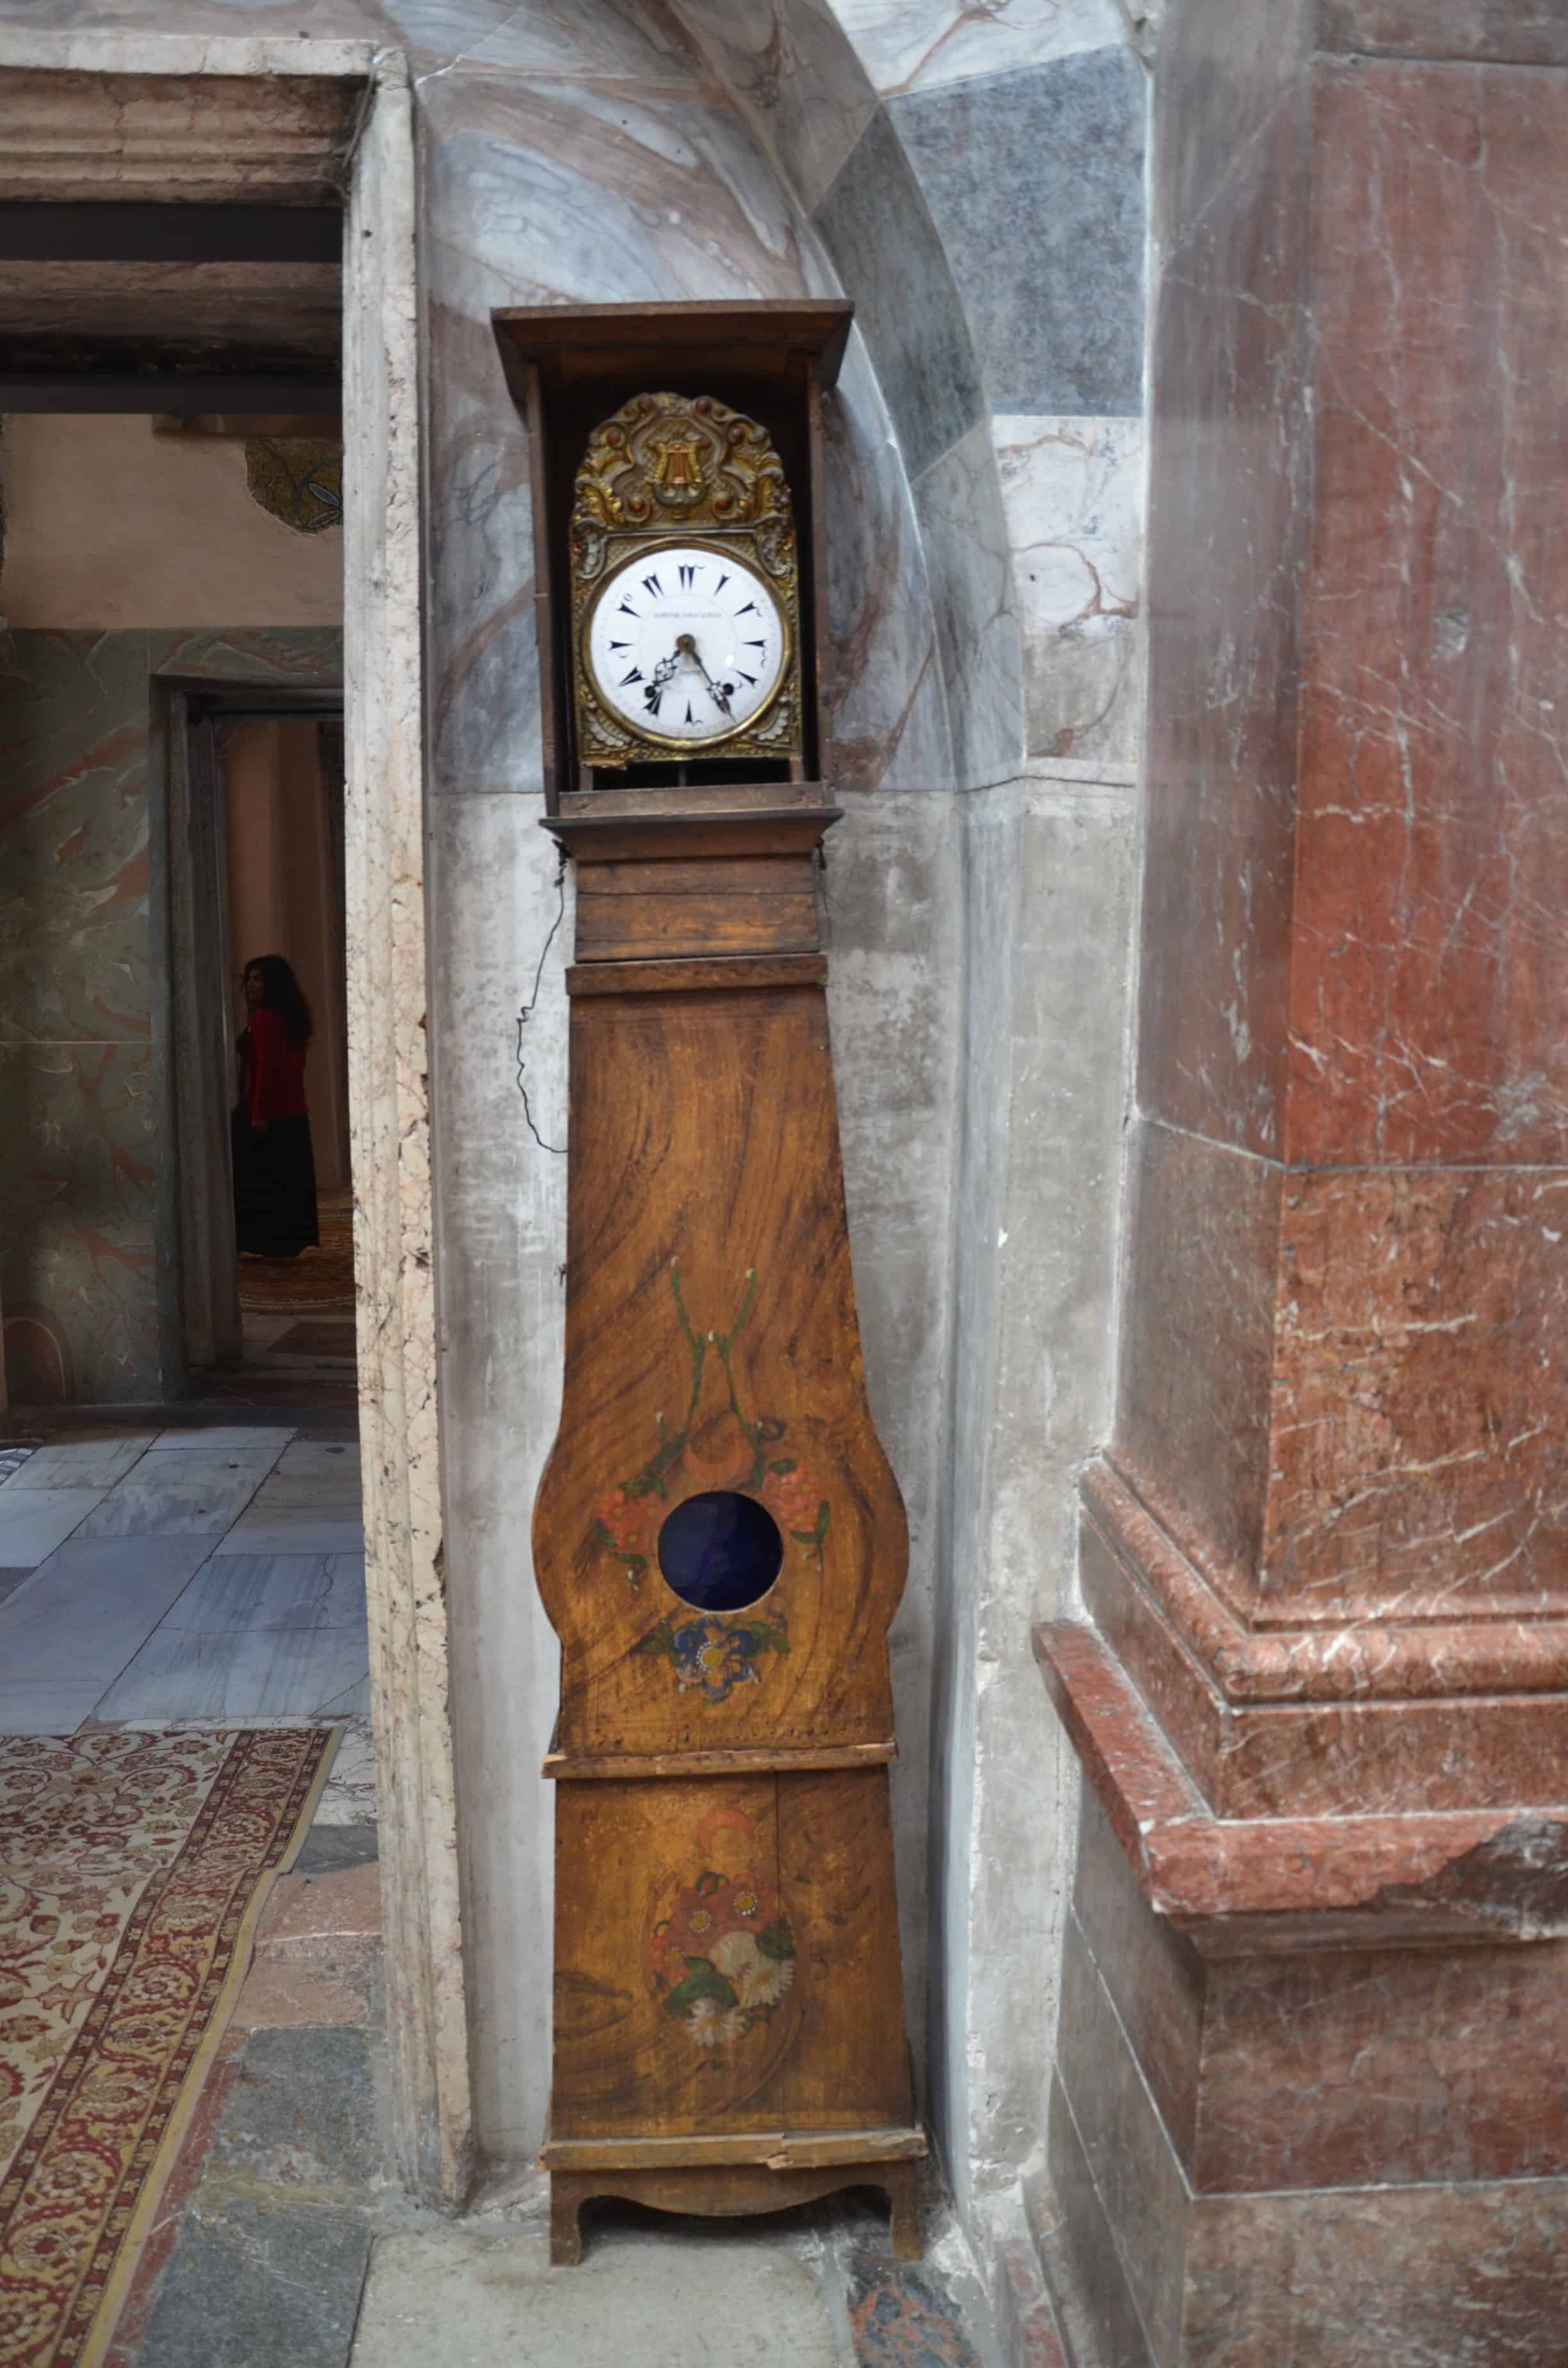 Clock from Smyrna at Nea Moni in Chios, Greece